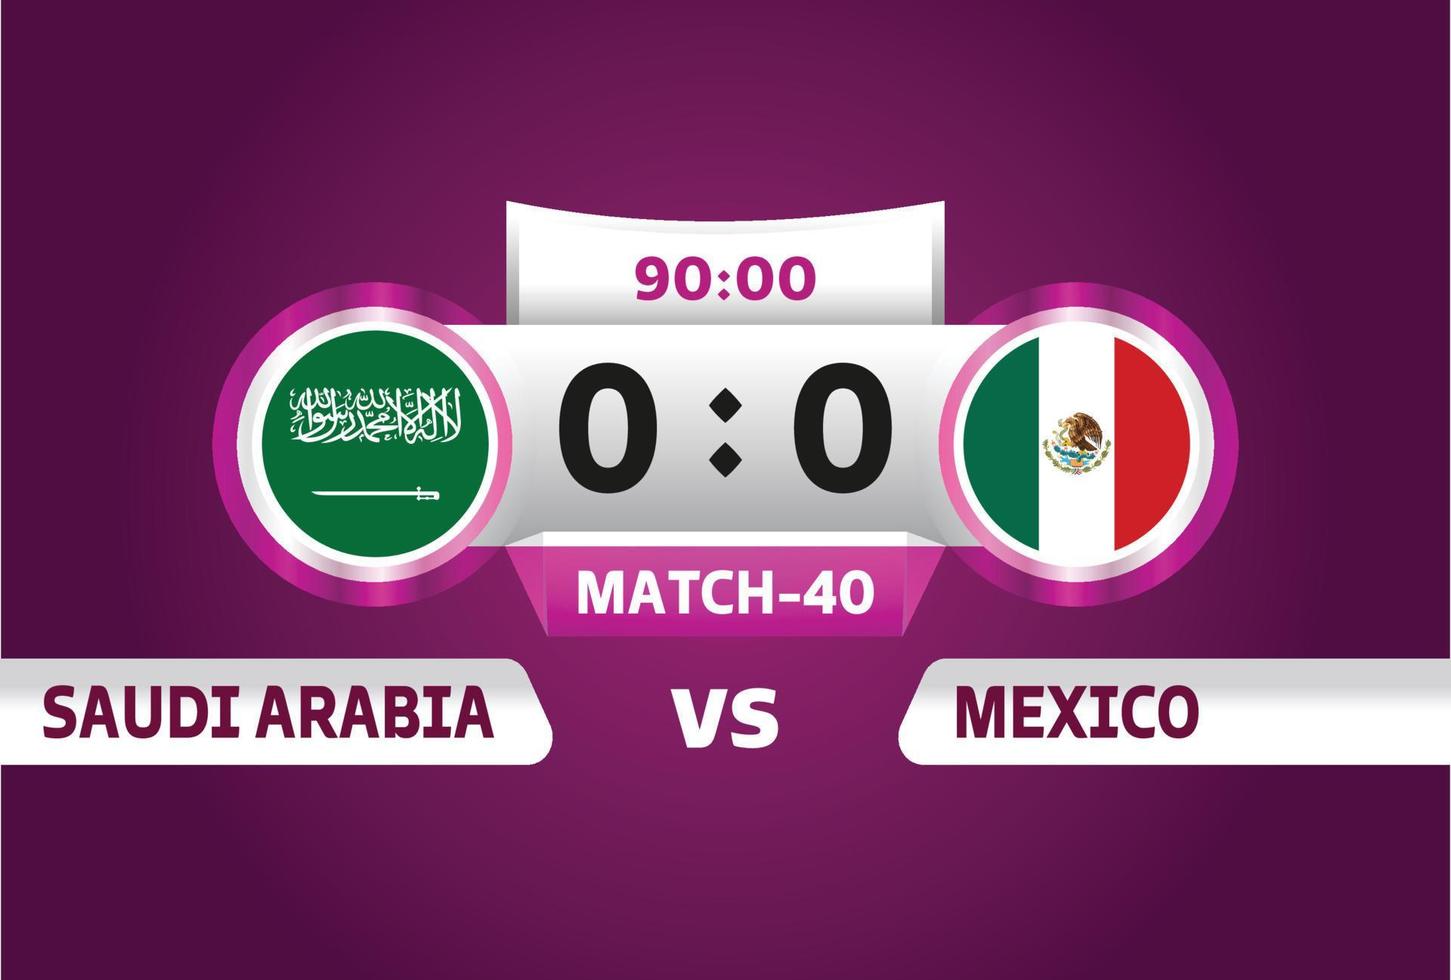 saudi arabia vs mexico, Football 2022, Group C. World Football Competition championship match versus teams intro sport background, championship competition final poster, vector illustration.